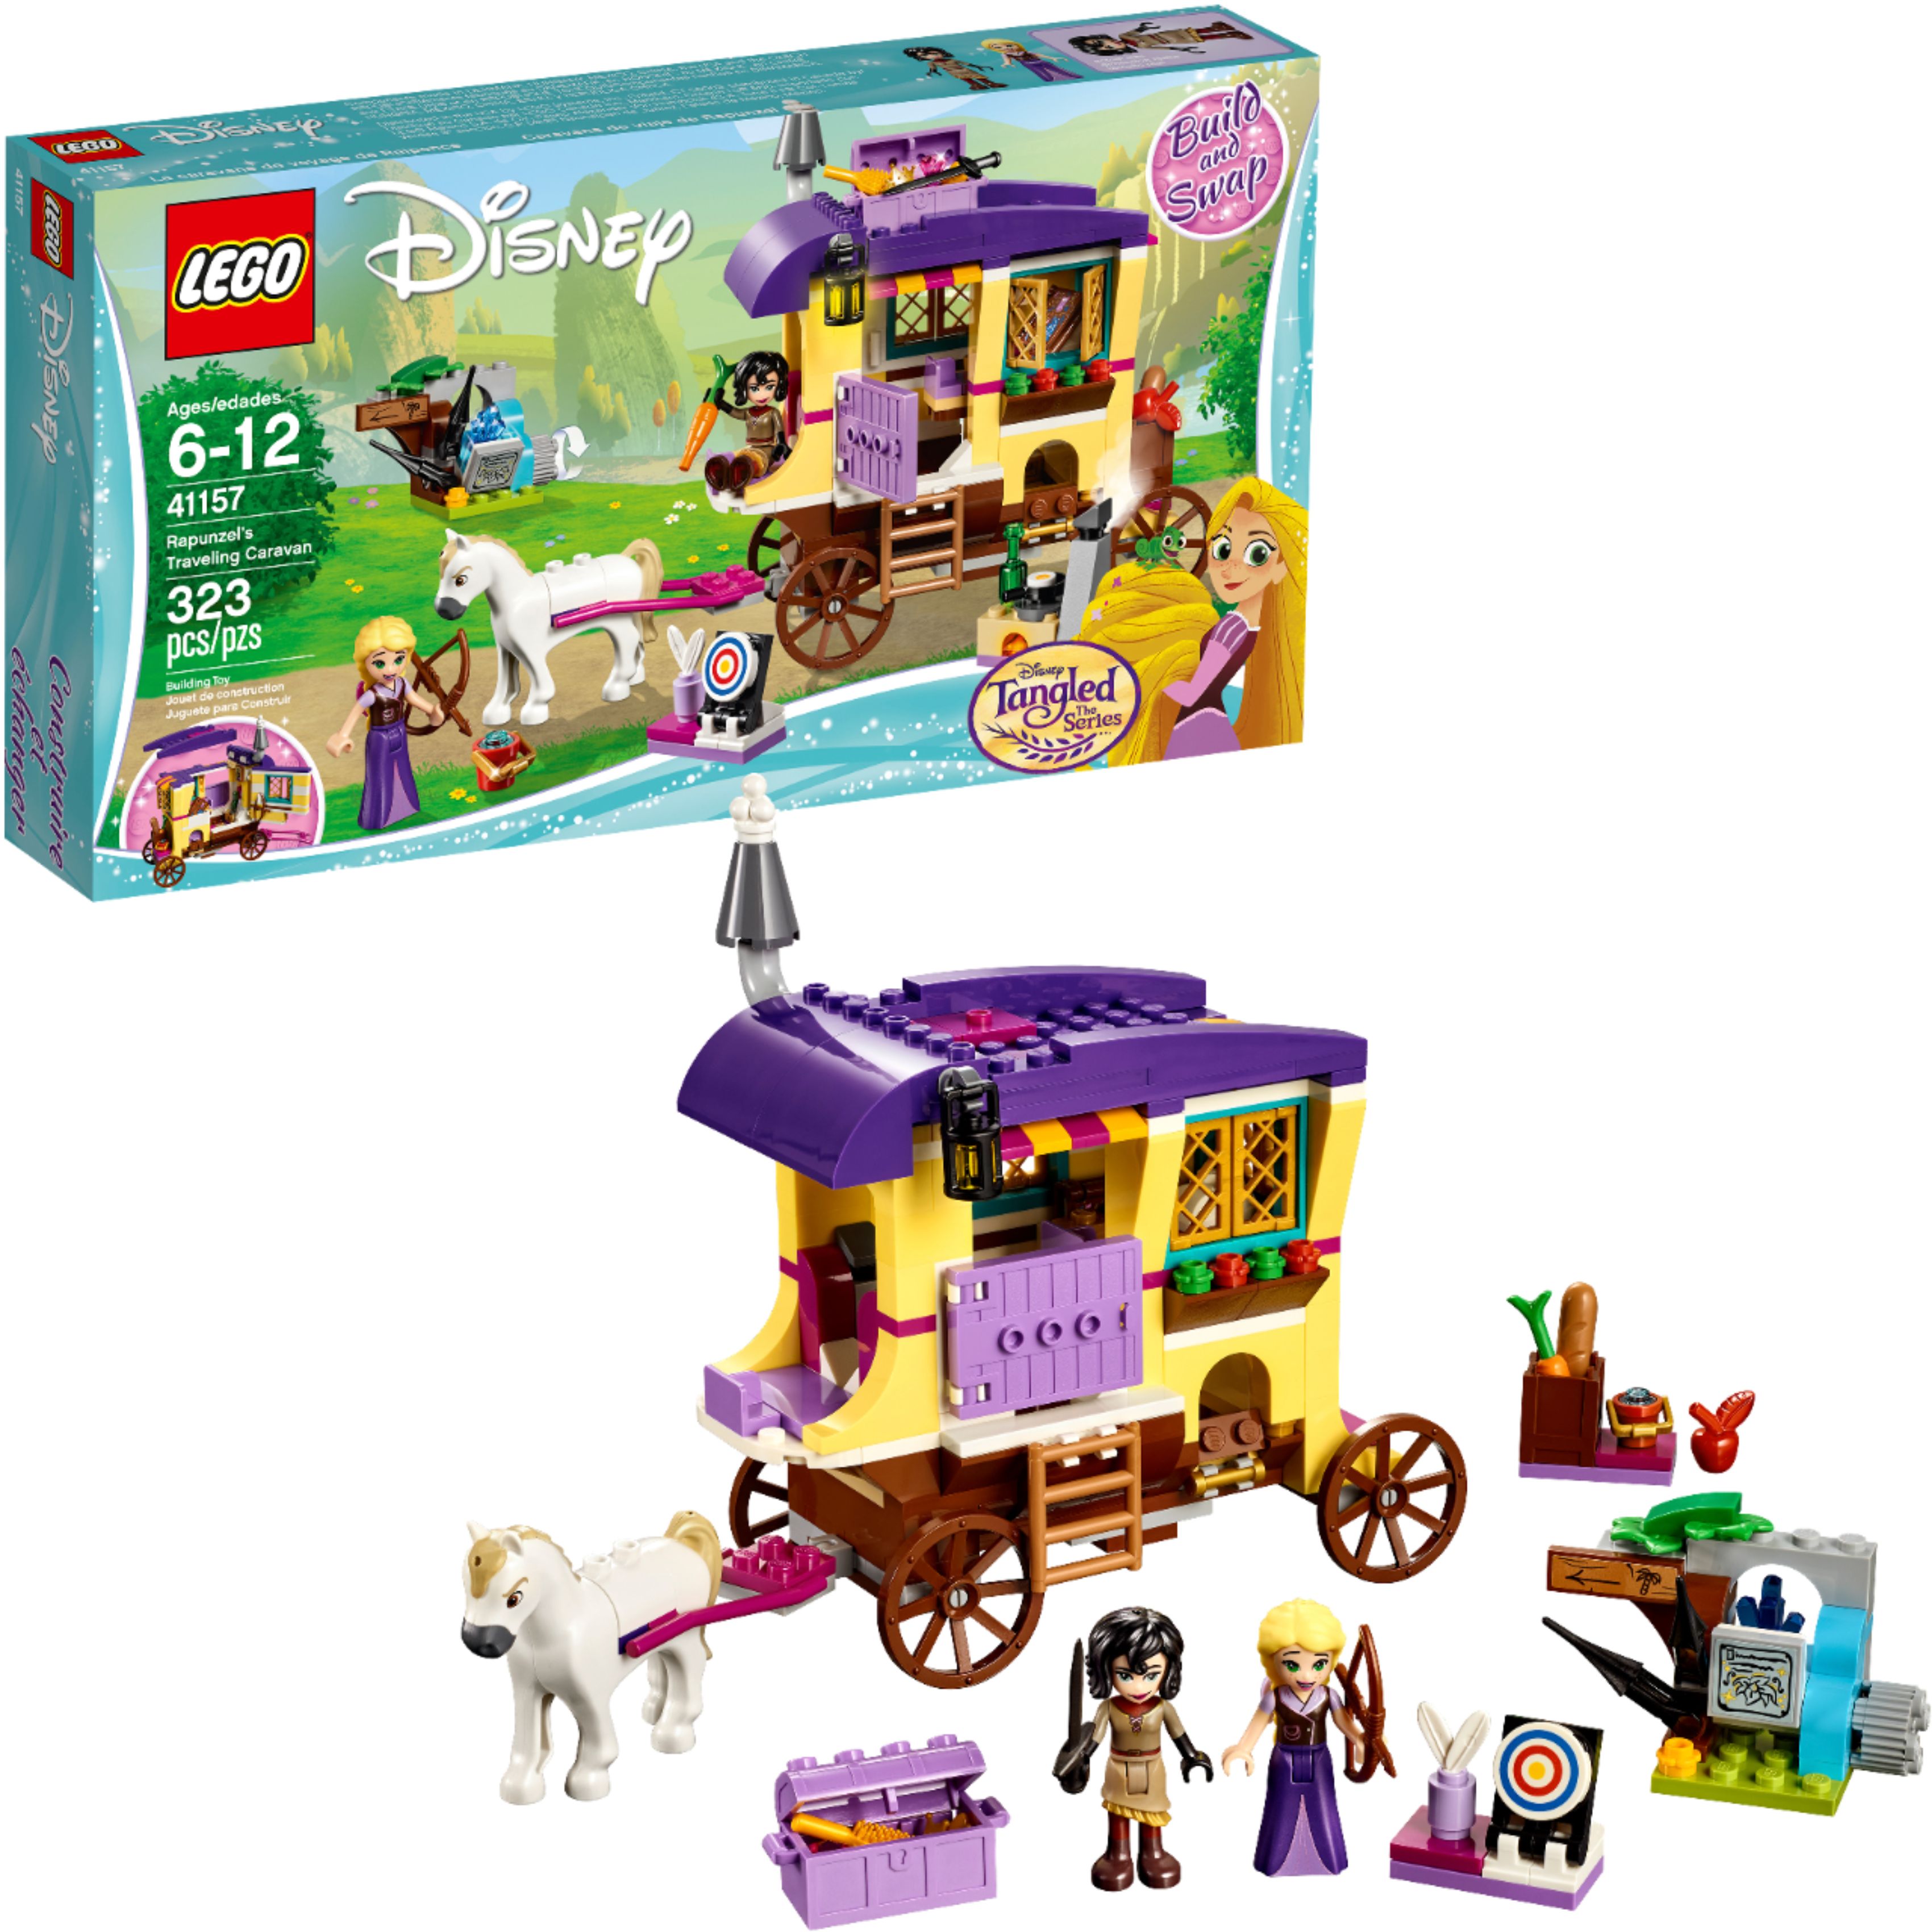 LEGO Disney Rapunzel's Traveling Caravan Set 41157 Multicolor 6213314 - Best Buy